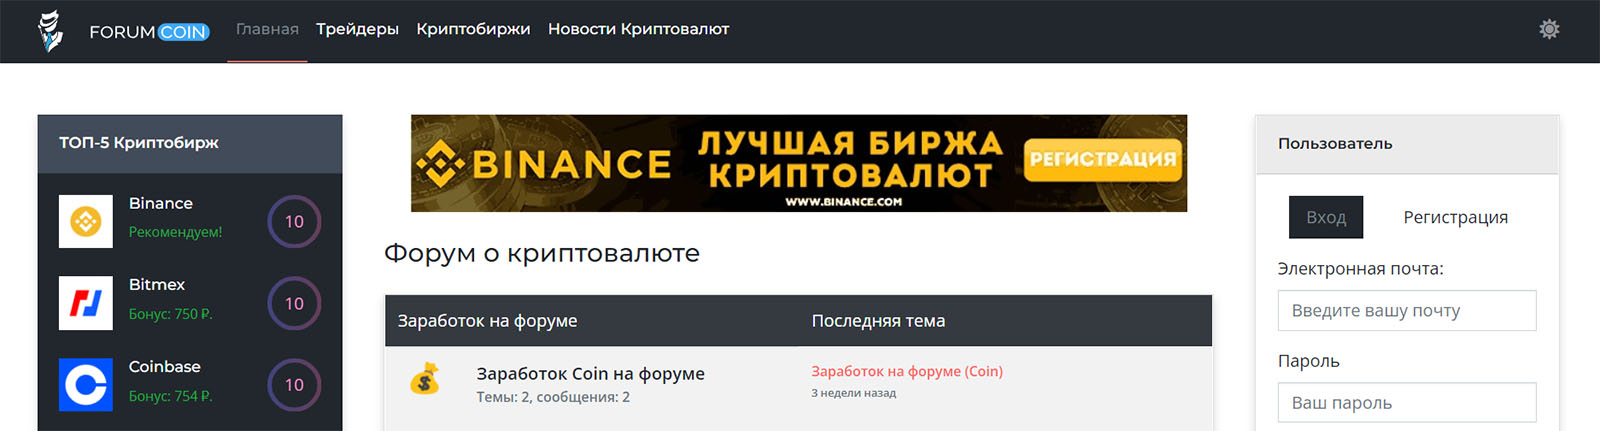 Внешний вид сайта forumcoin.ru